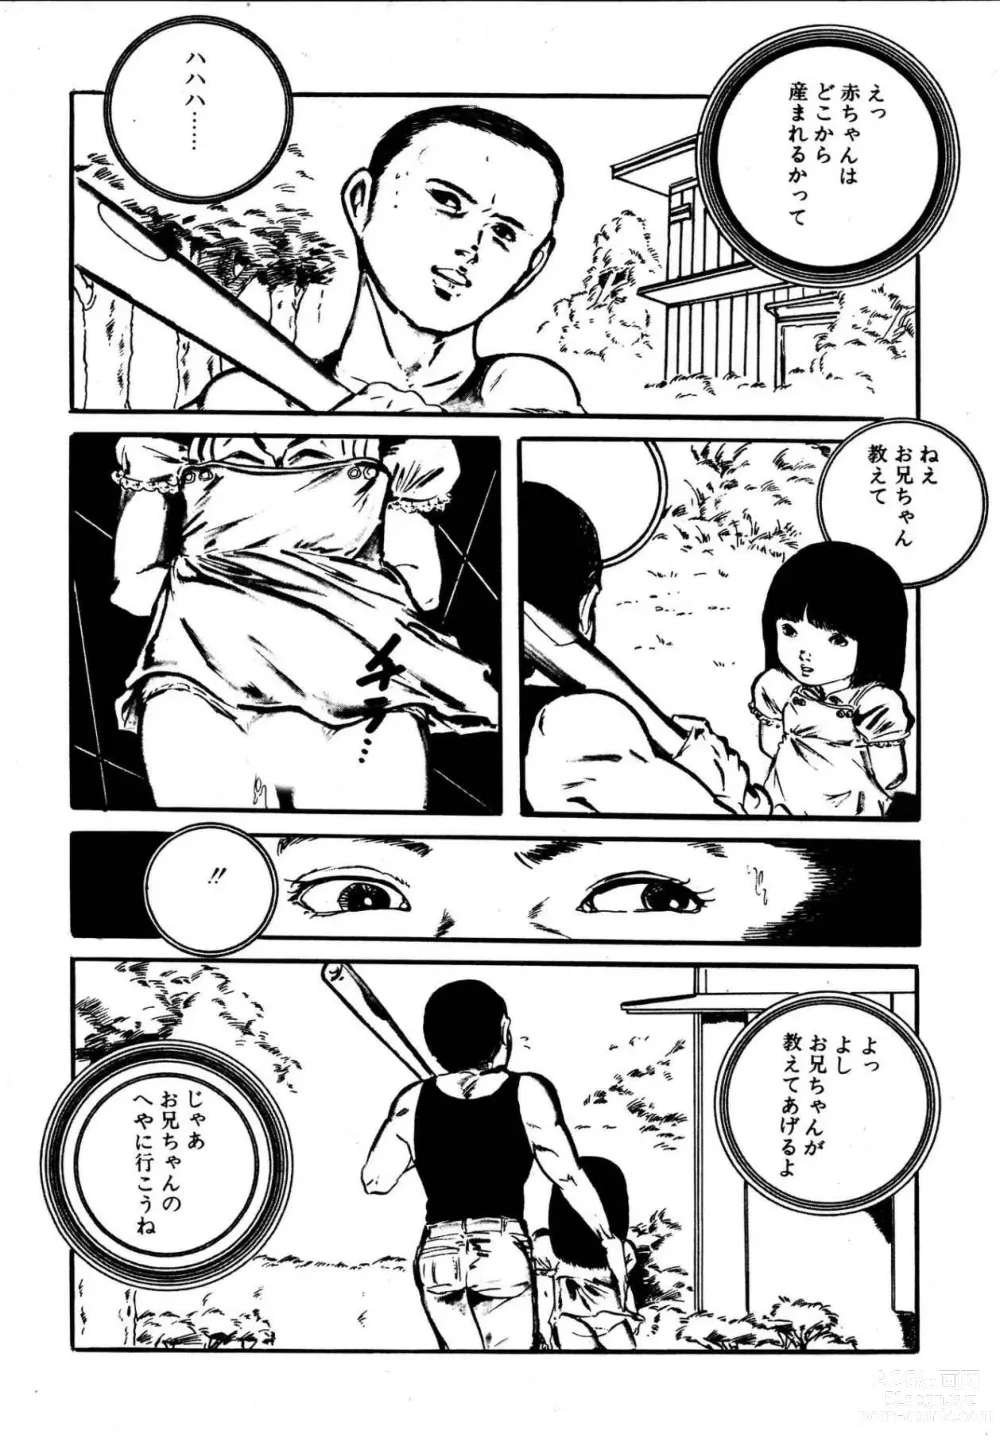 Page 184 of manga Dreaming fairy